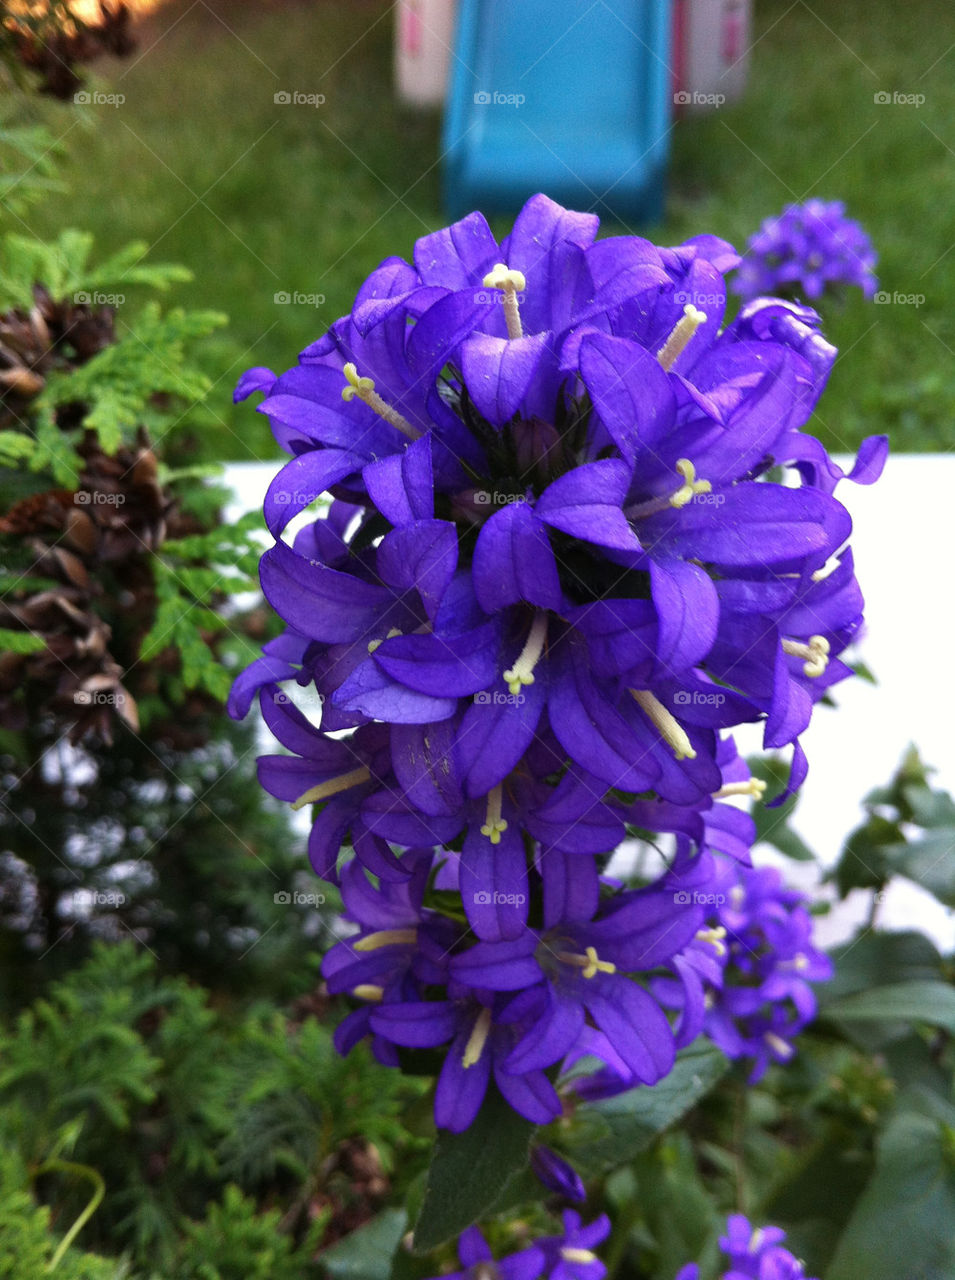 flowers garden blue by hmsaibhlin